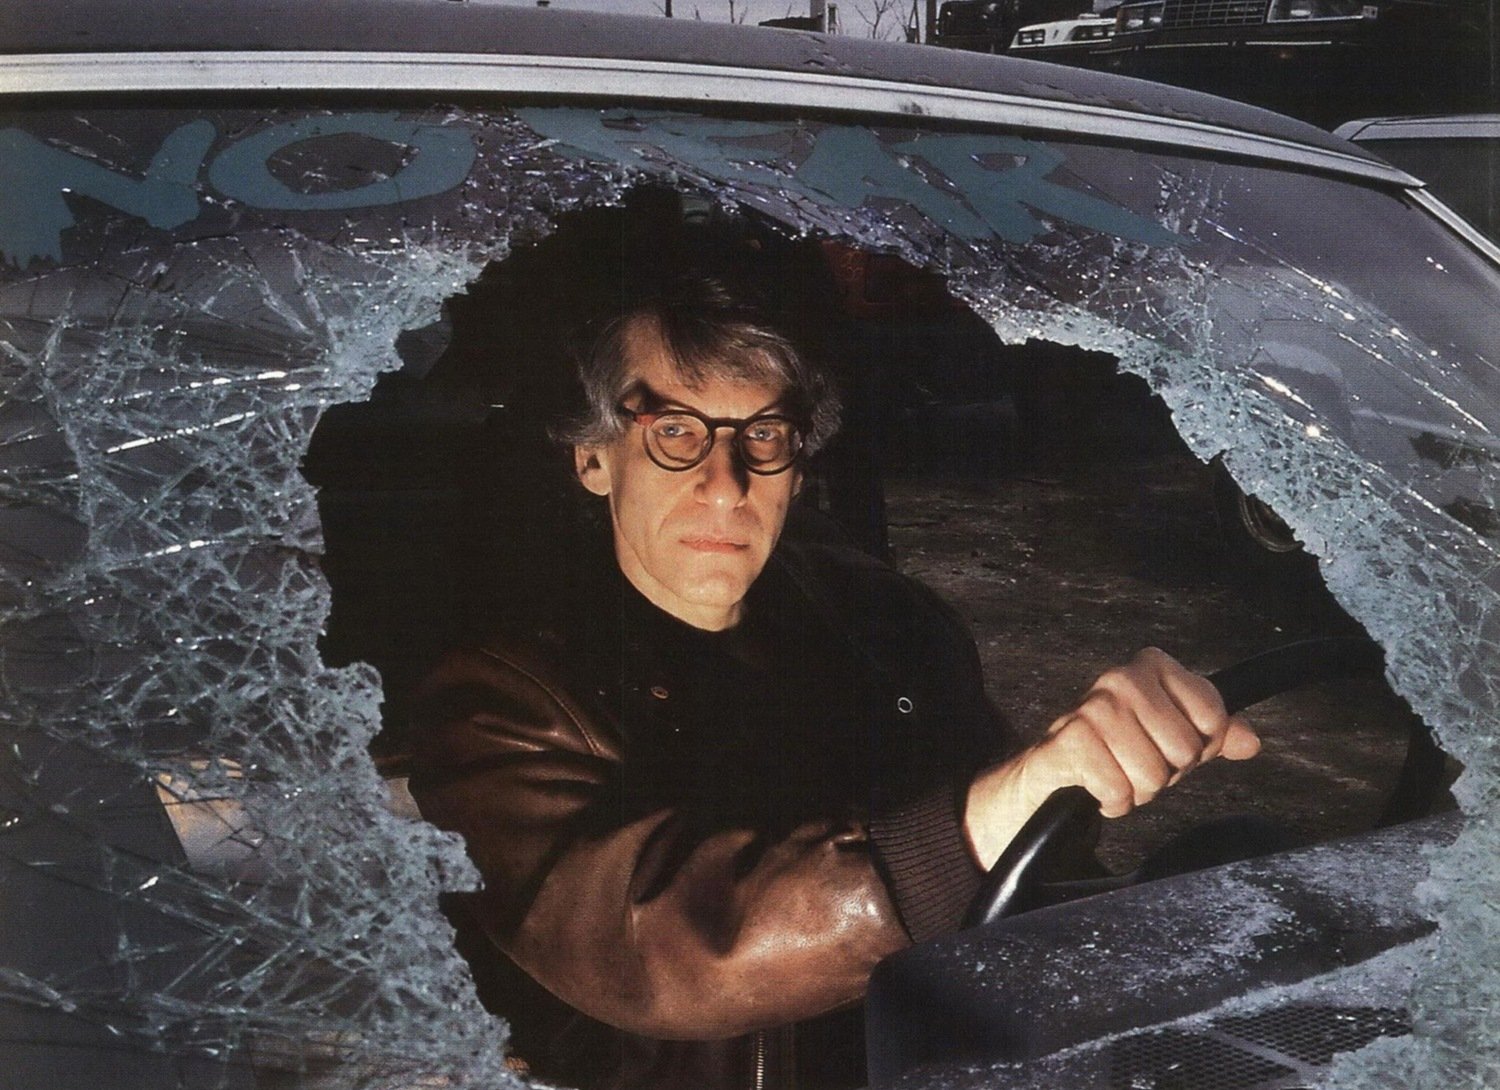 Crash (1996) directed by David Cronenberg • Reviews, film + cast